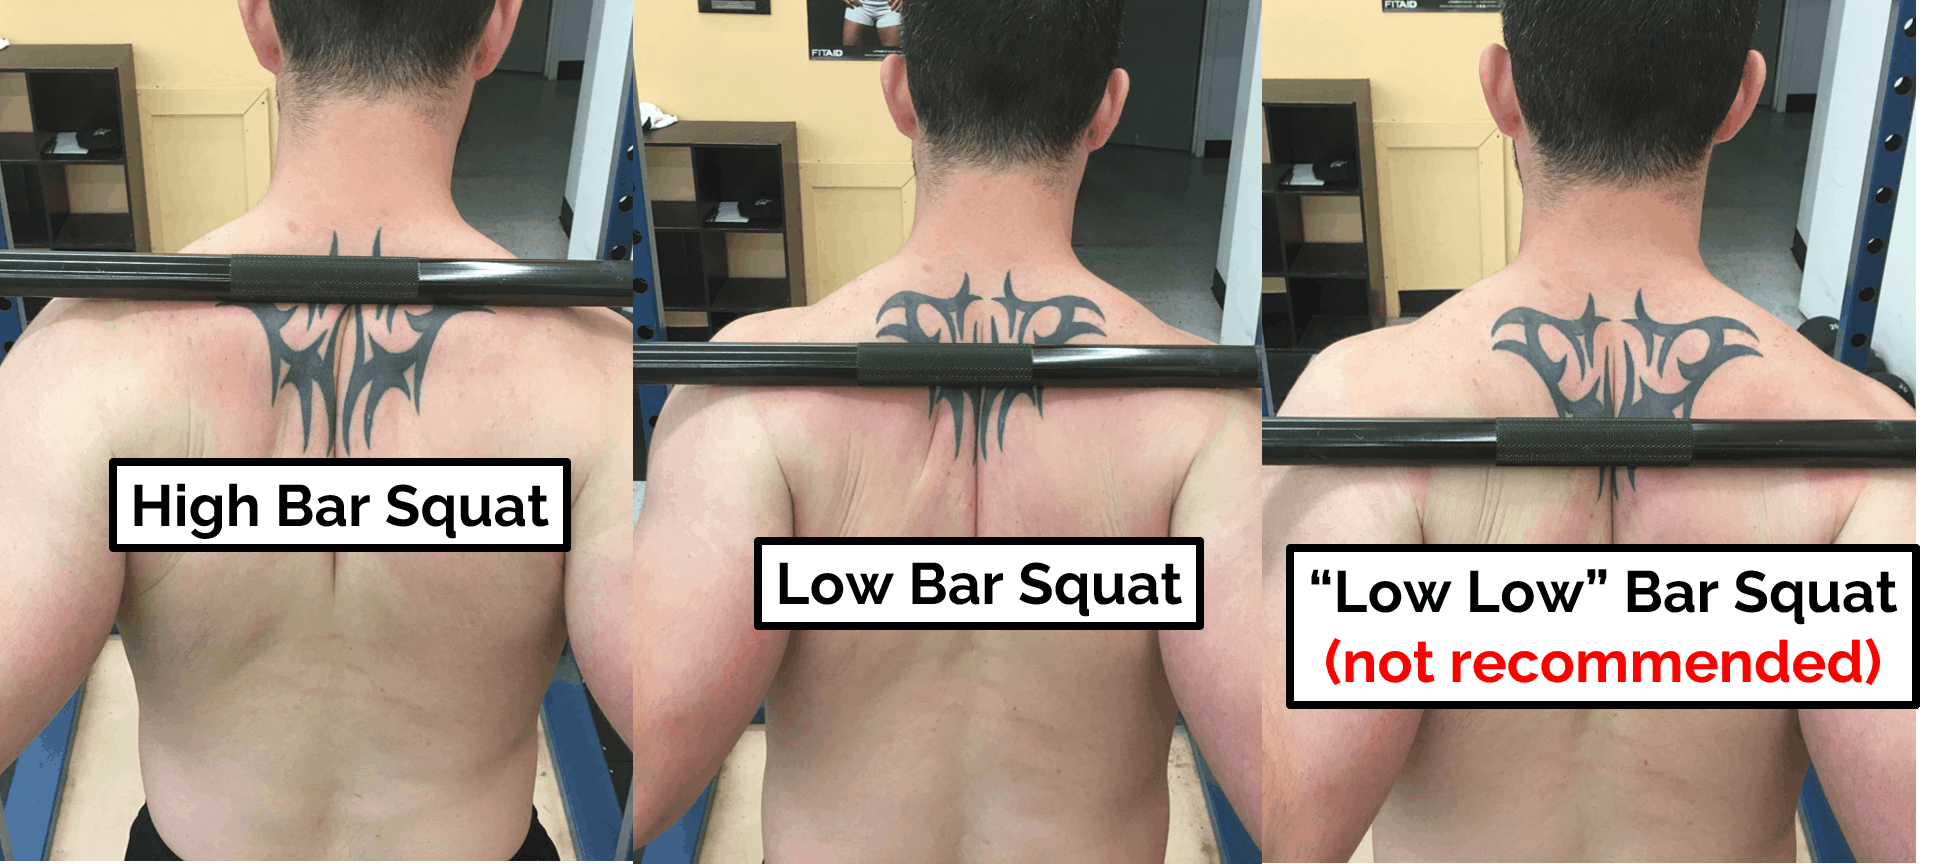 low low bar squat elbow pain during squats